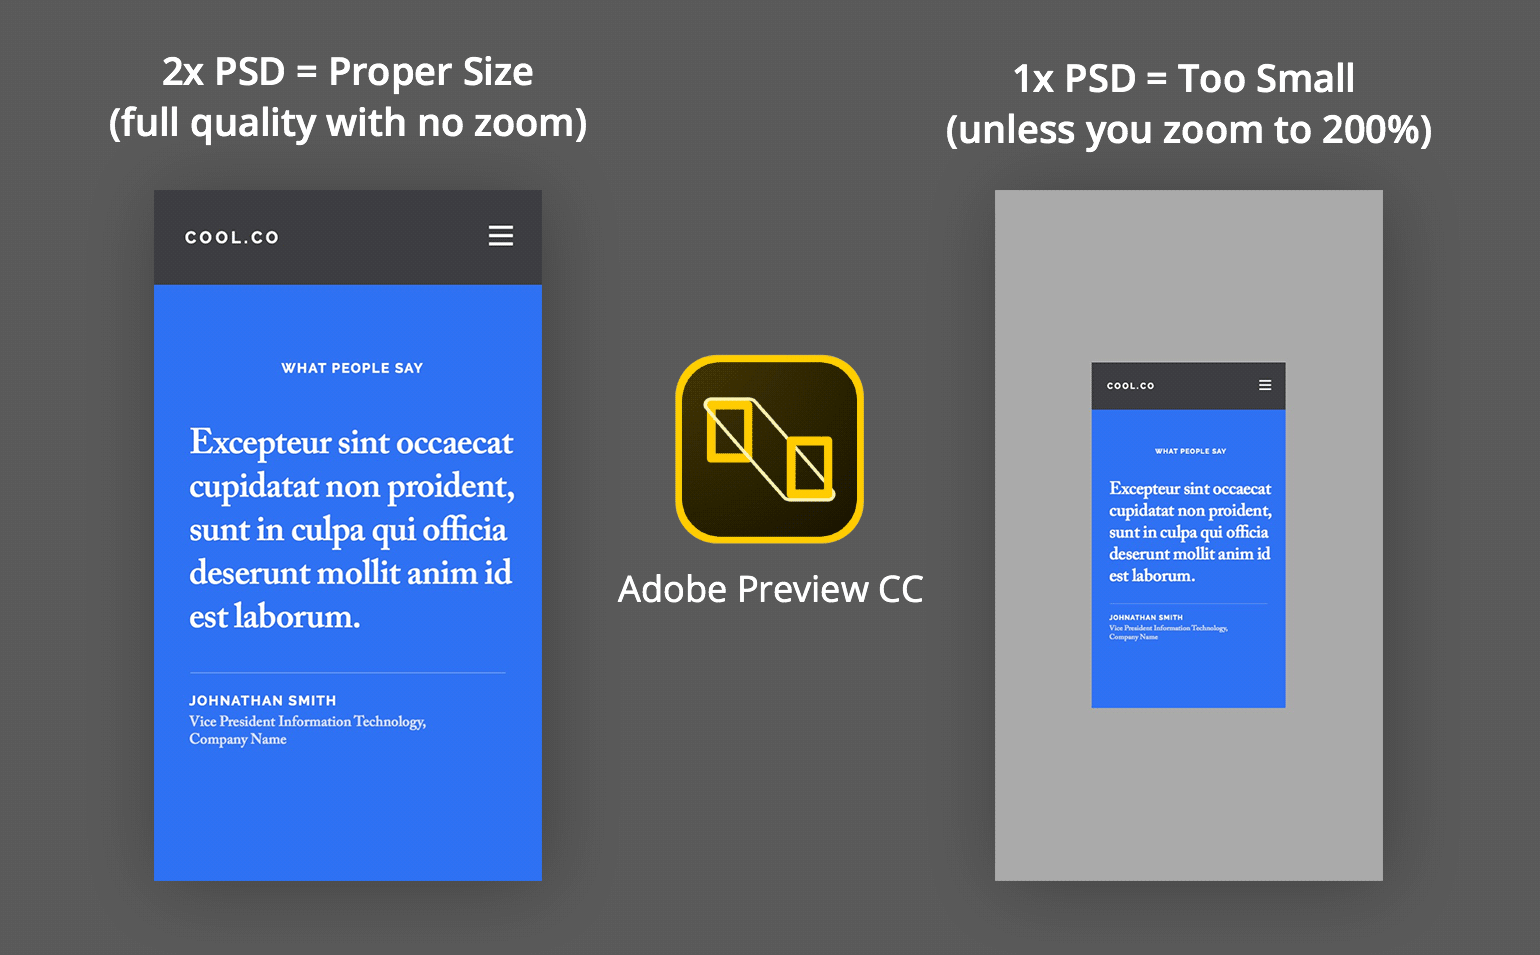 2x versus 1x in Adobe Preview CC